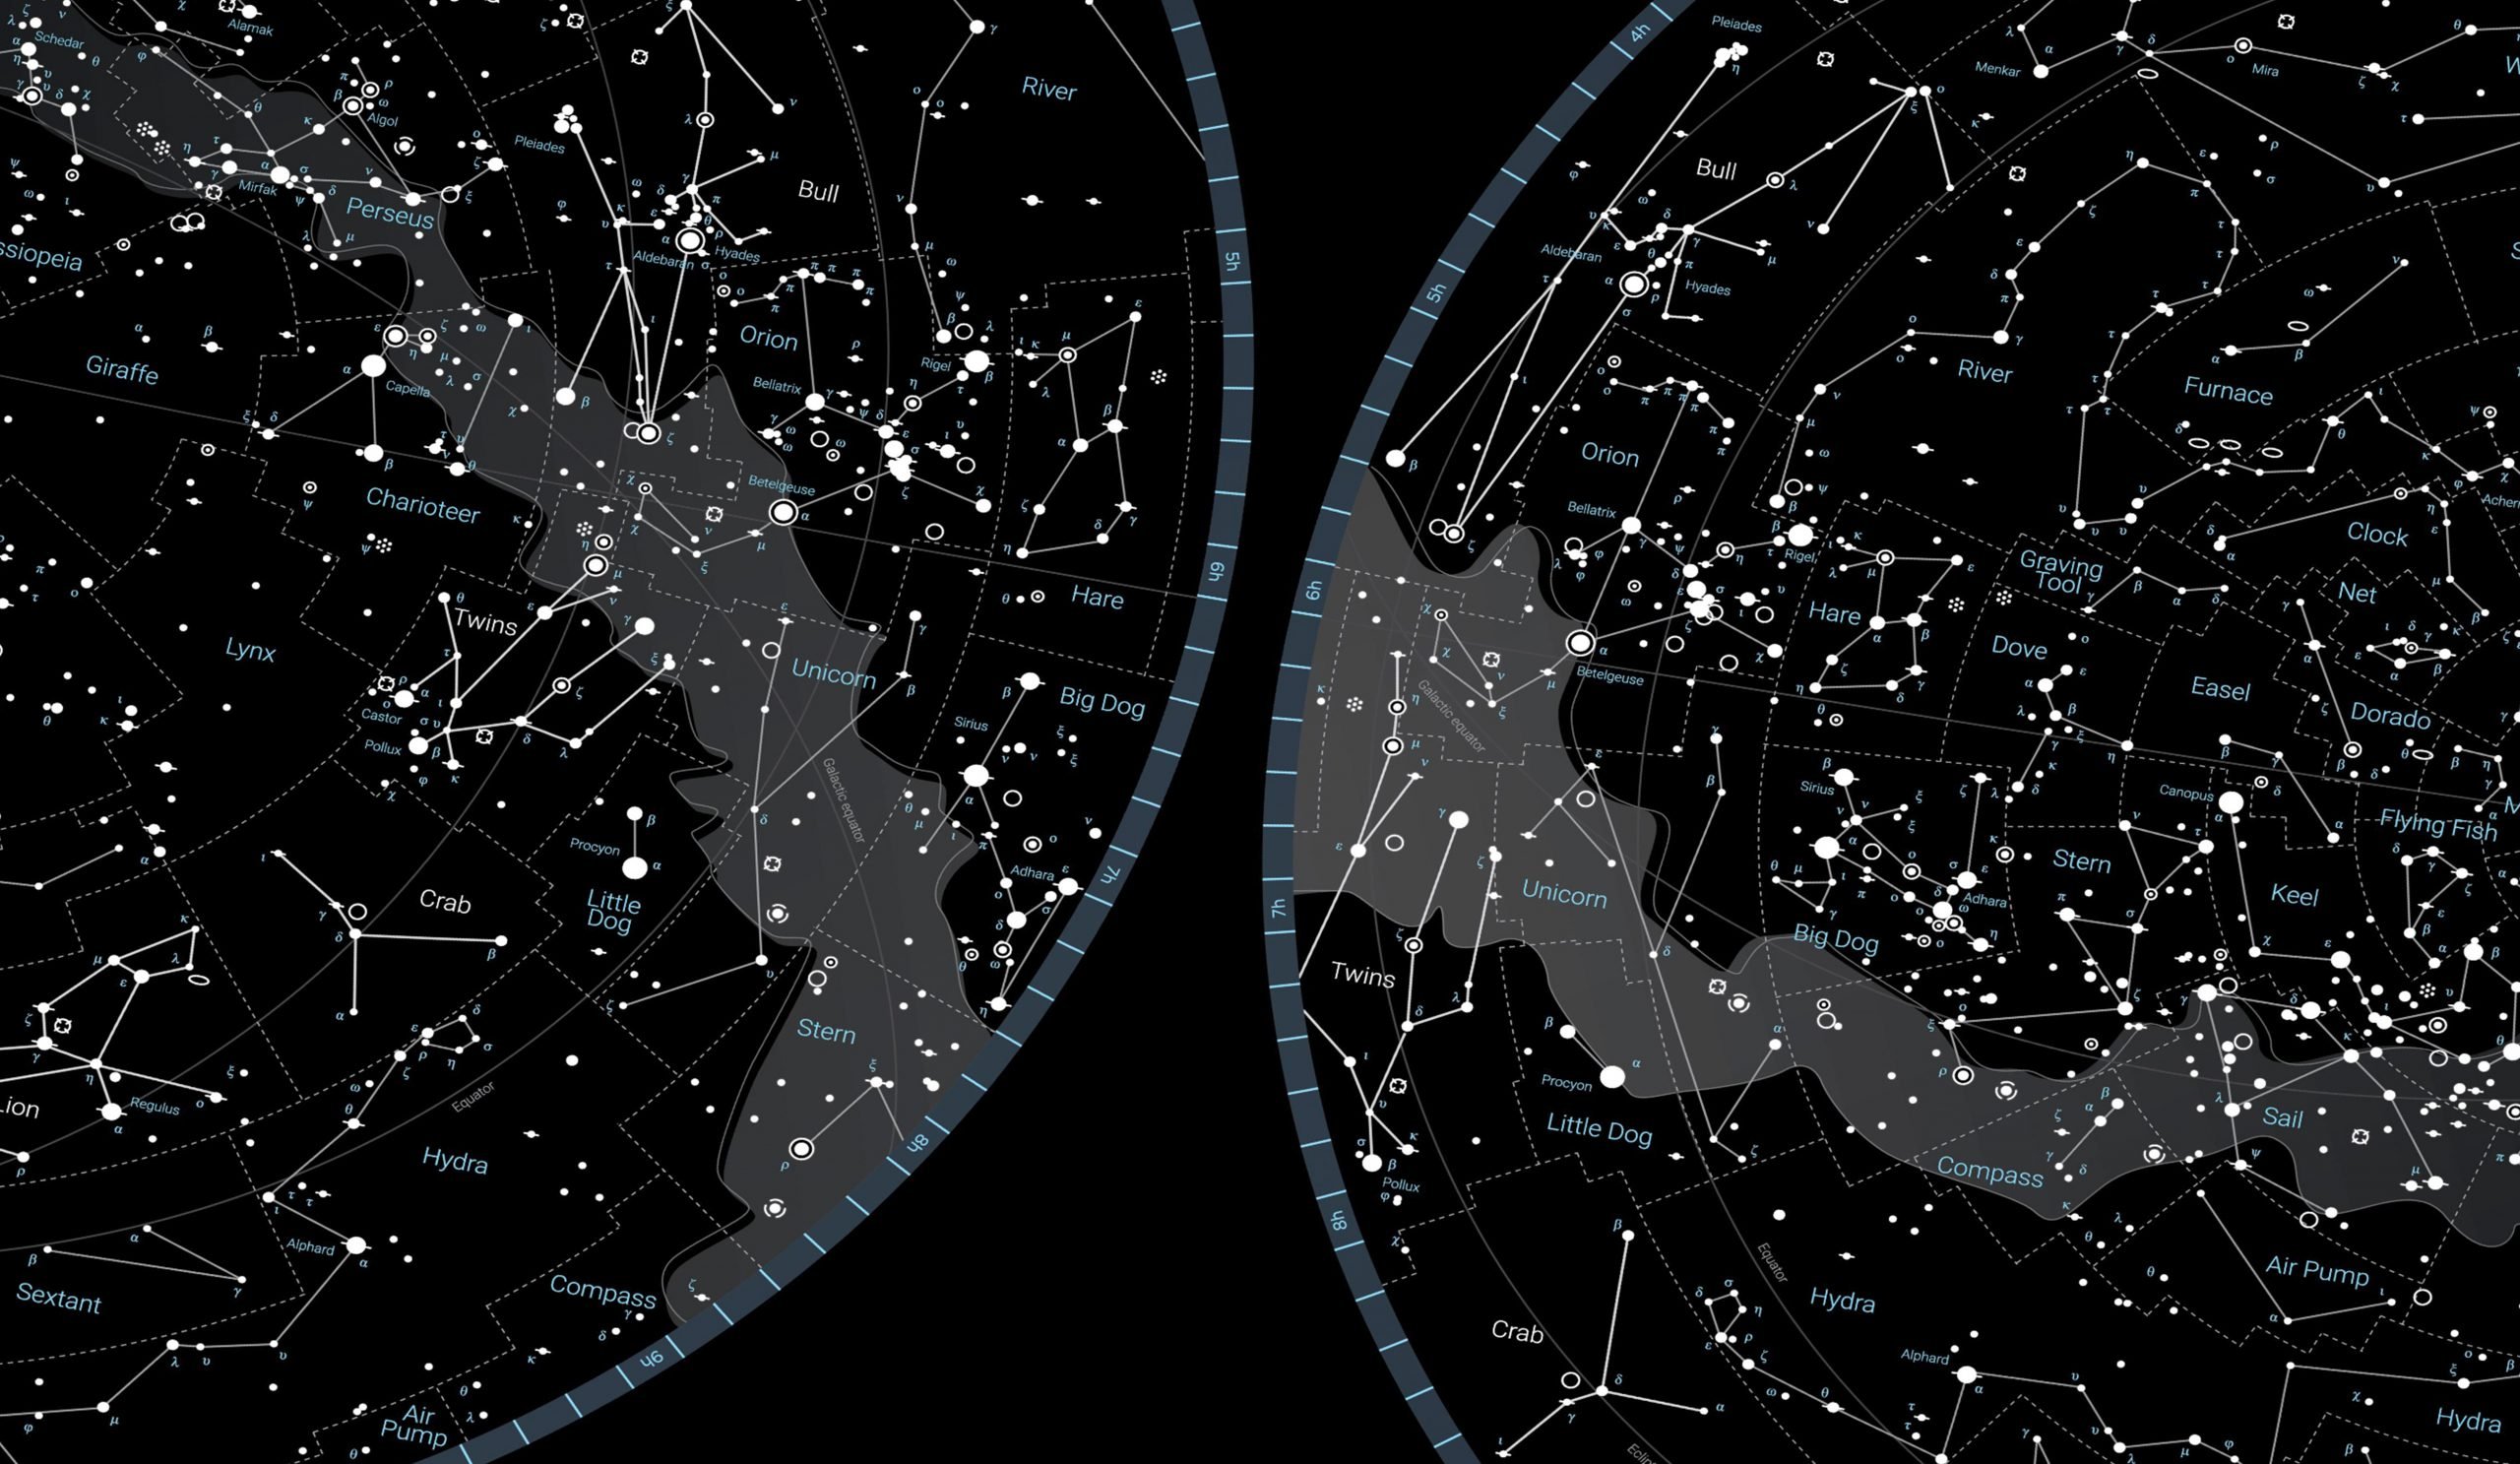 Астрономический атлас звёздного неба. Звёздная карта неба. Звездная карта созвездия. План звездного неба.